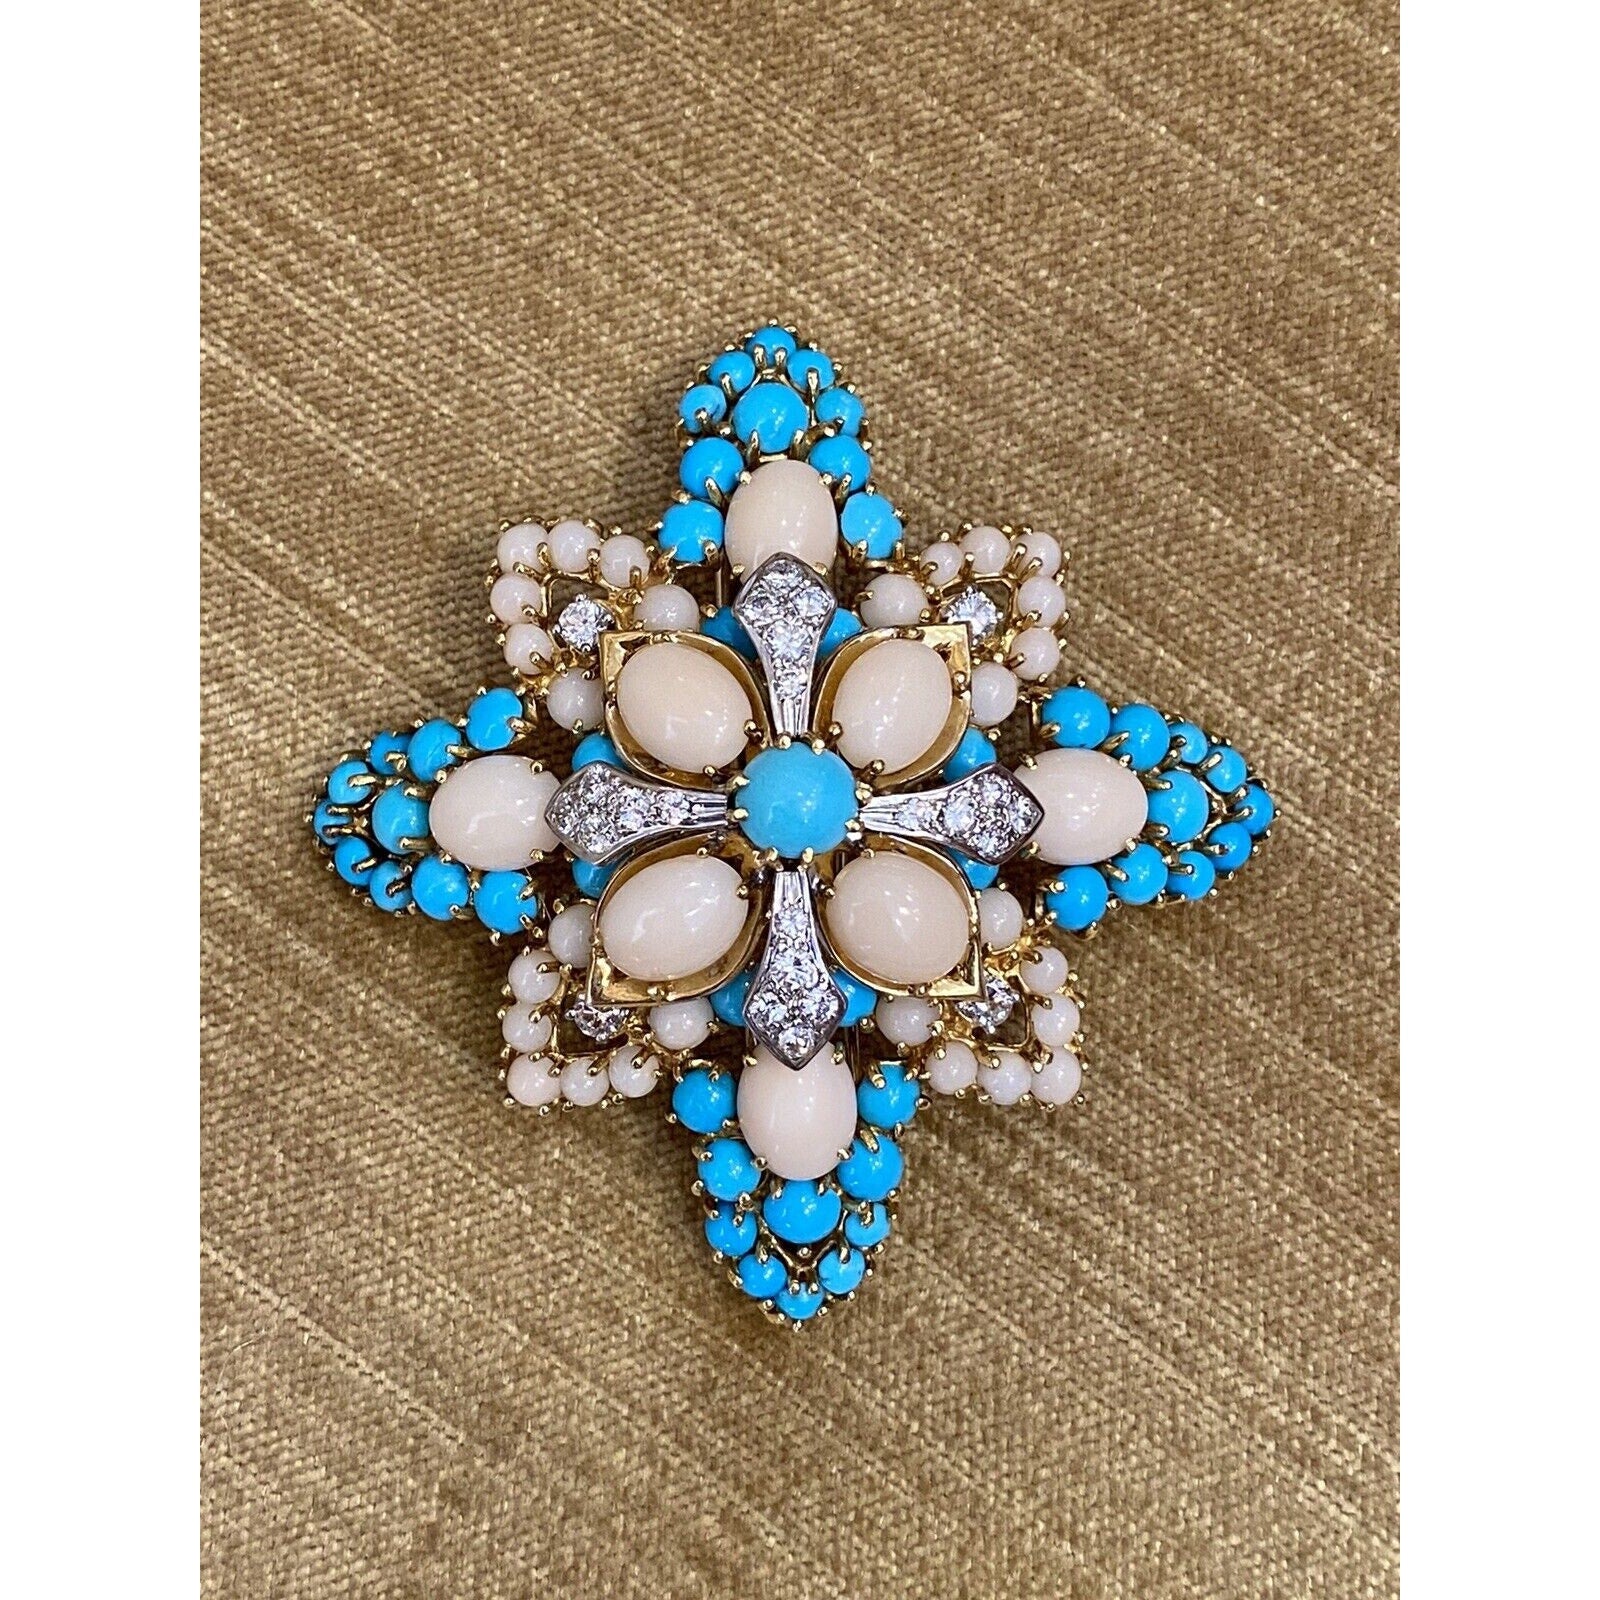 Angel Skin Coral & Turquoise Maltese Cross Pin Brooch 18k Yellow gold - HM2274B